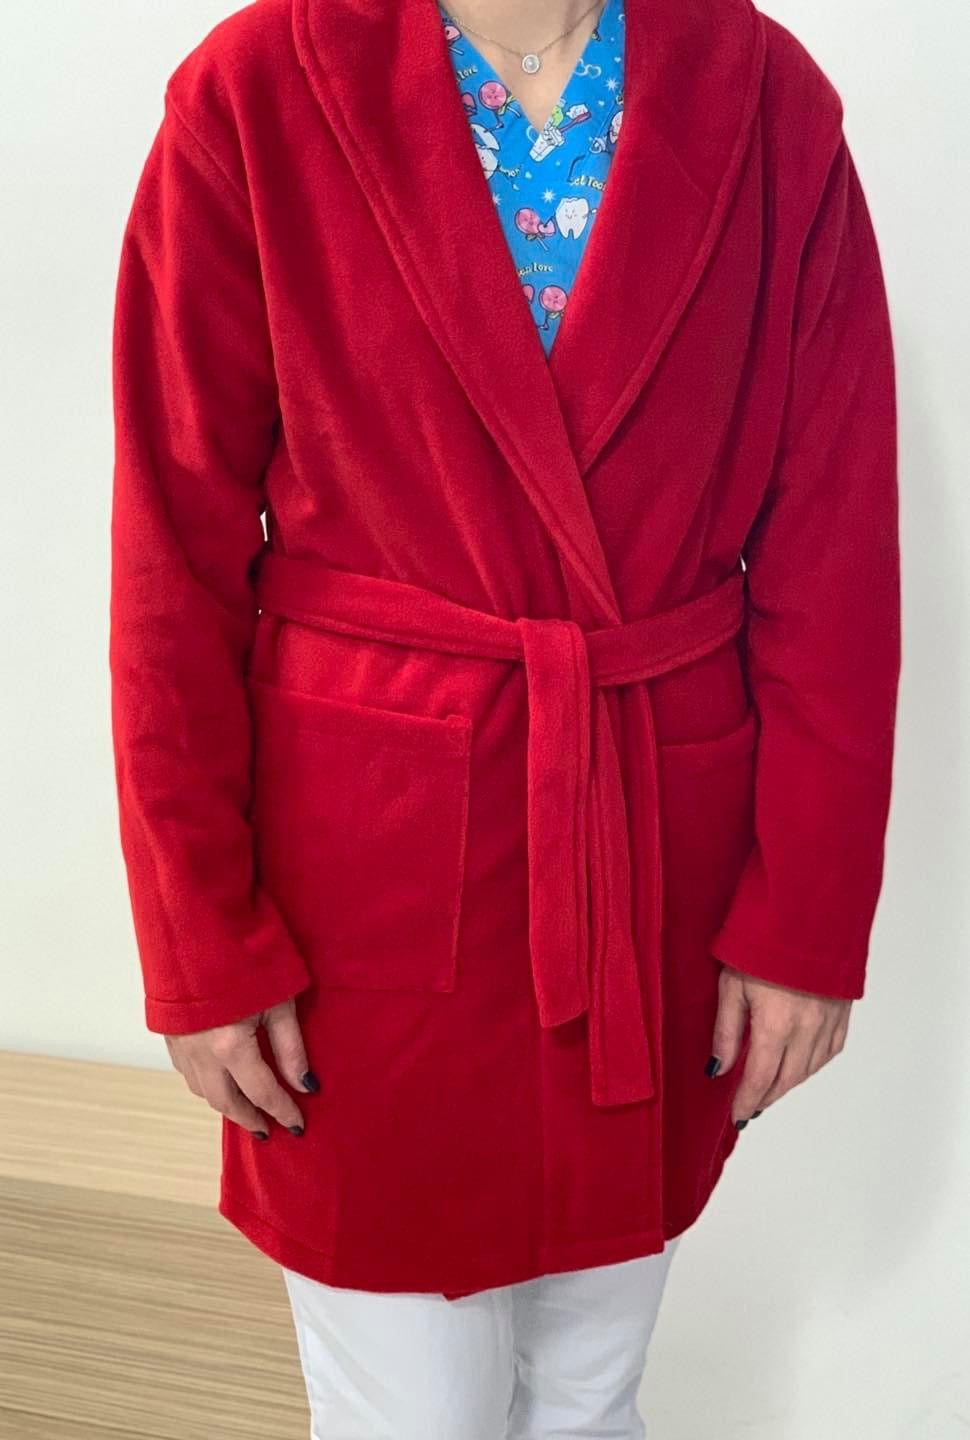 asistenta medicala imbracata intr-un halat medical polar rosu cu buzunare si cordon in talie